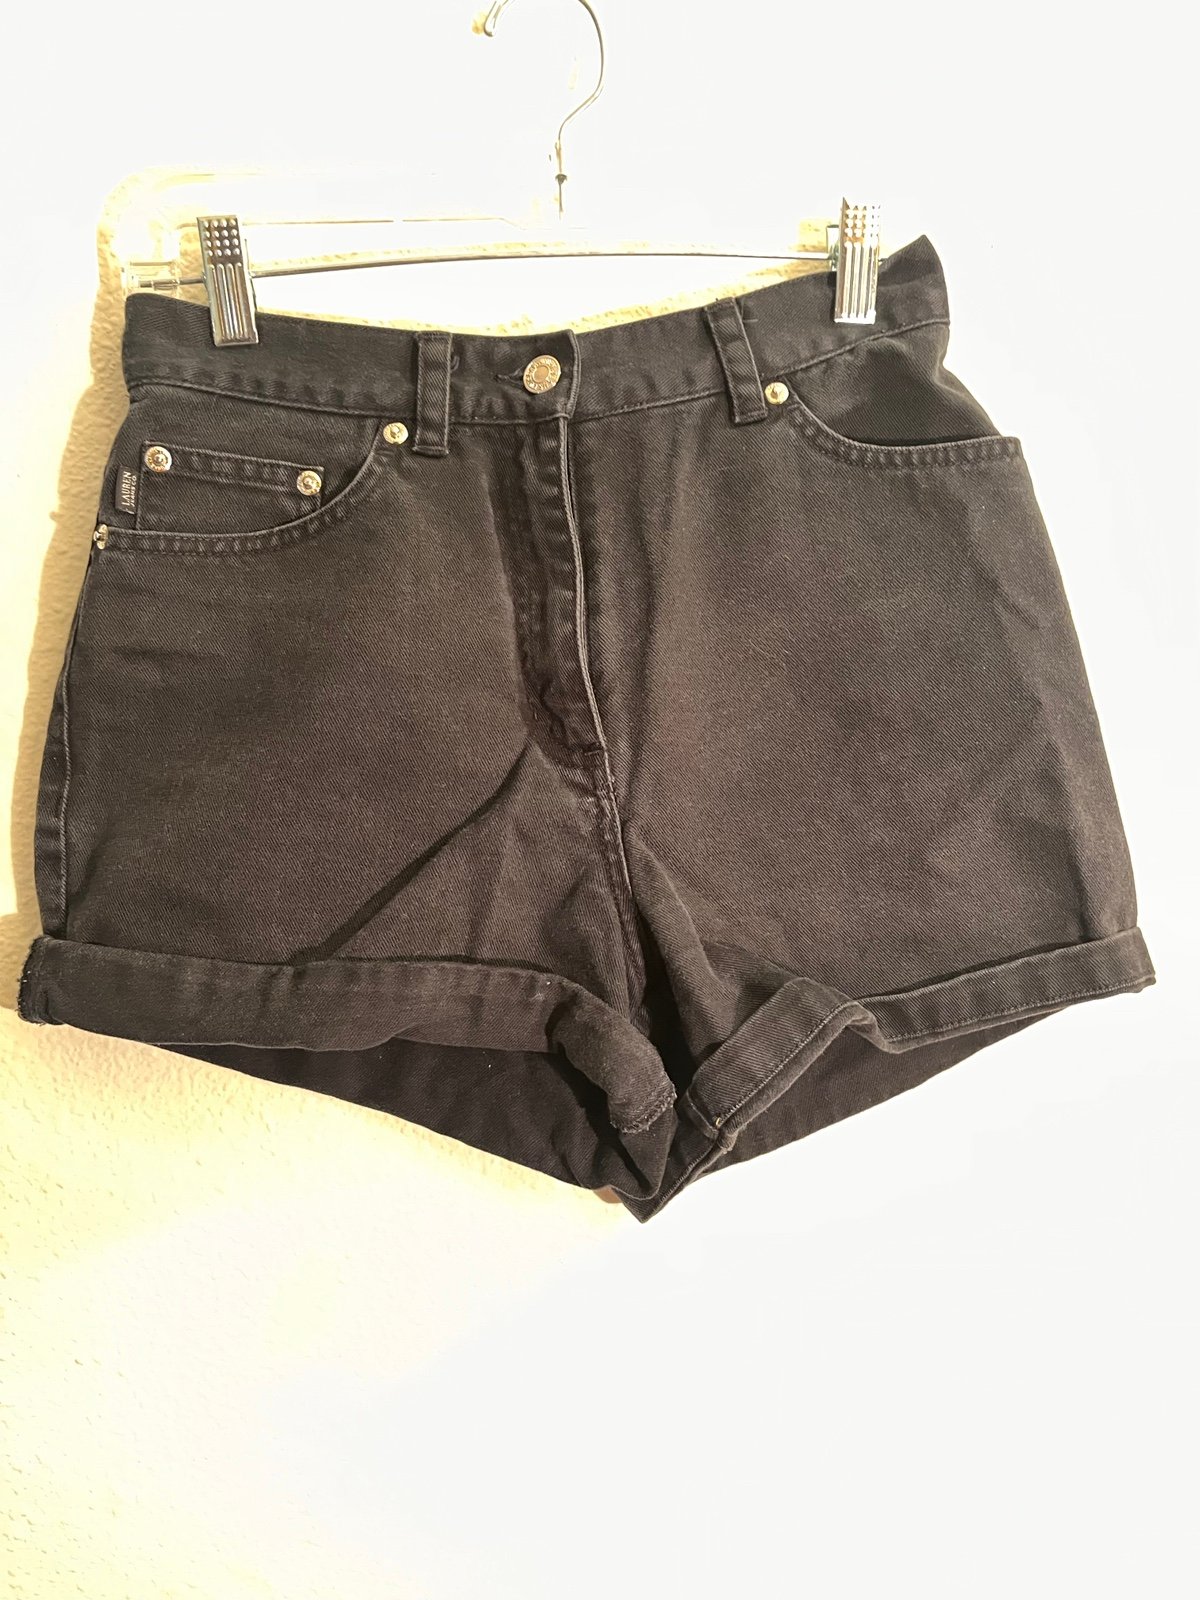 Gorgeous Ralph Lauren Vintage Jean Shorts PIjrJu162 all